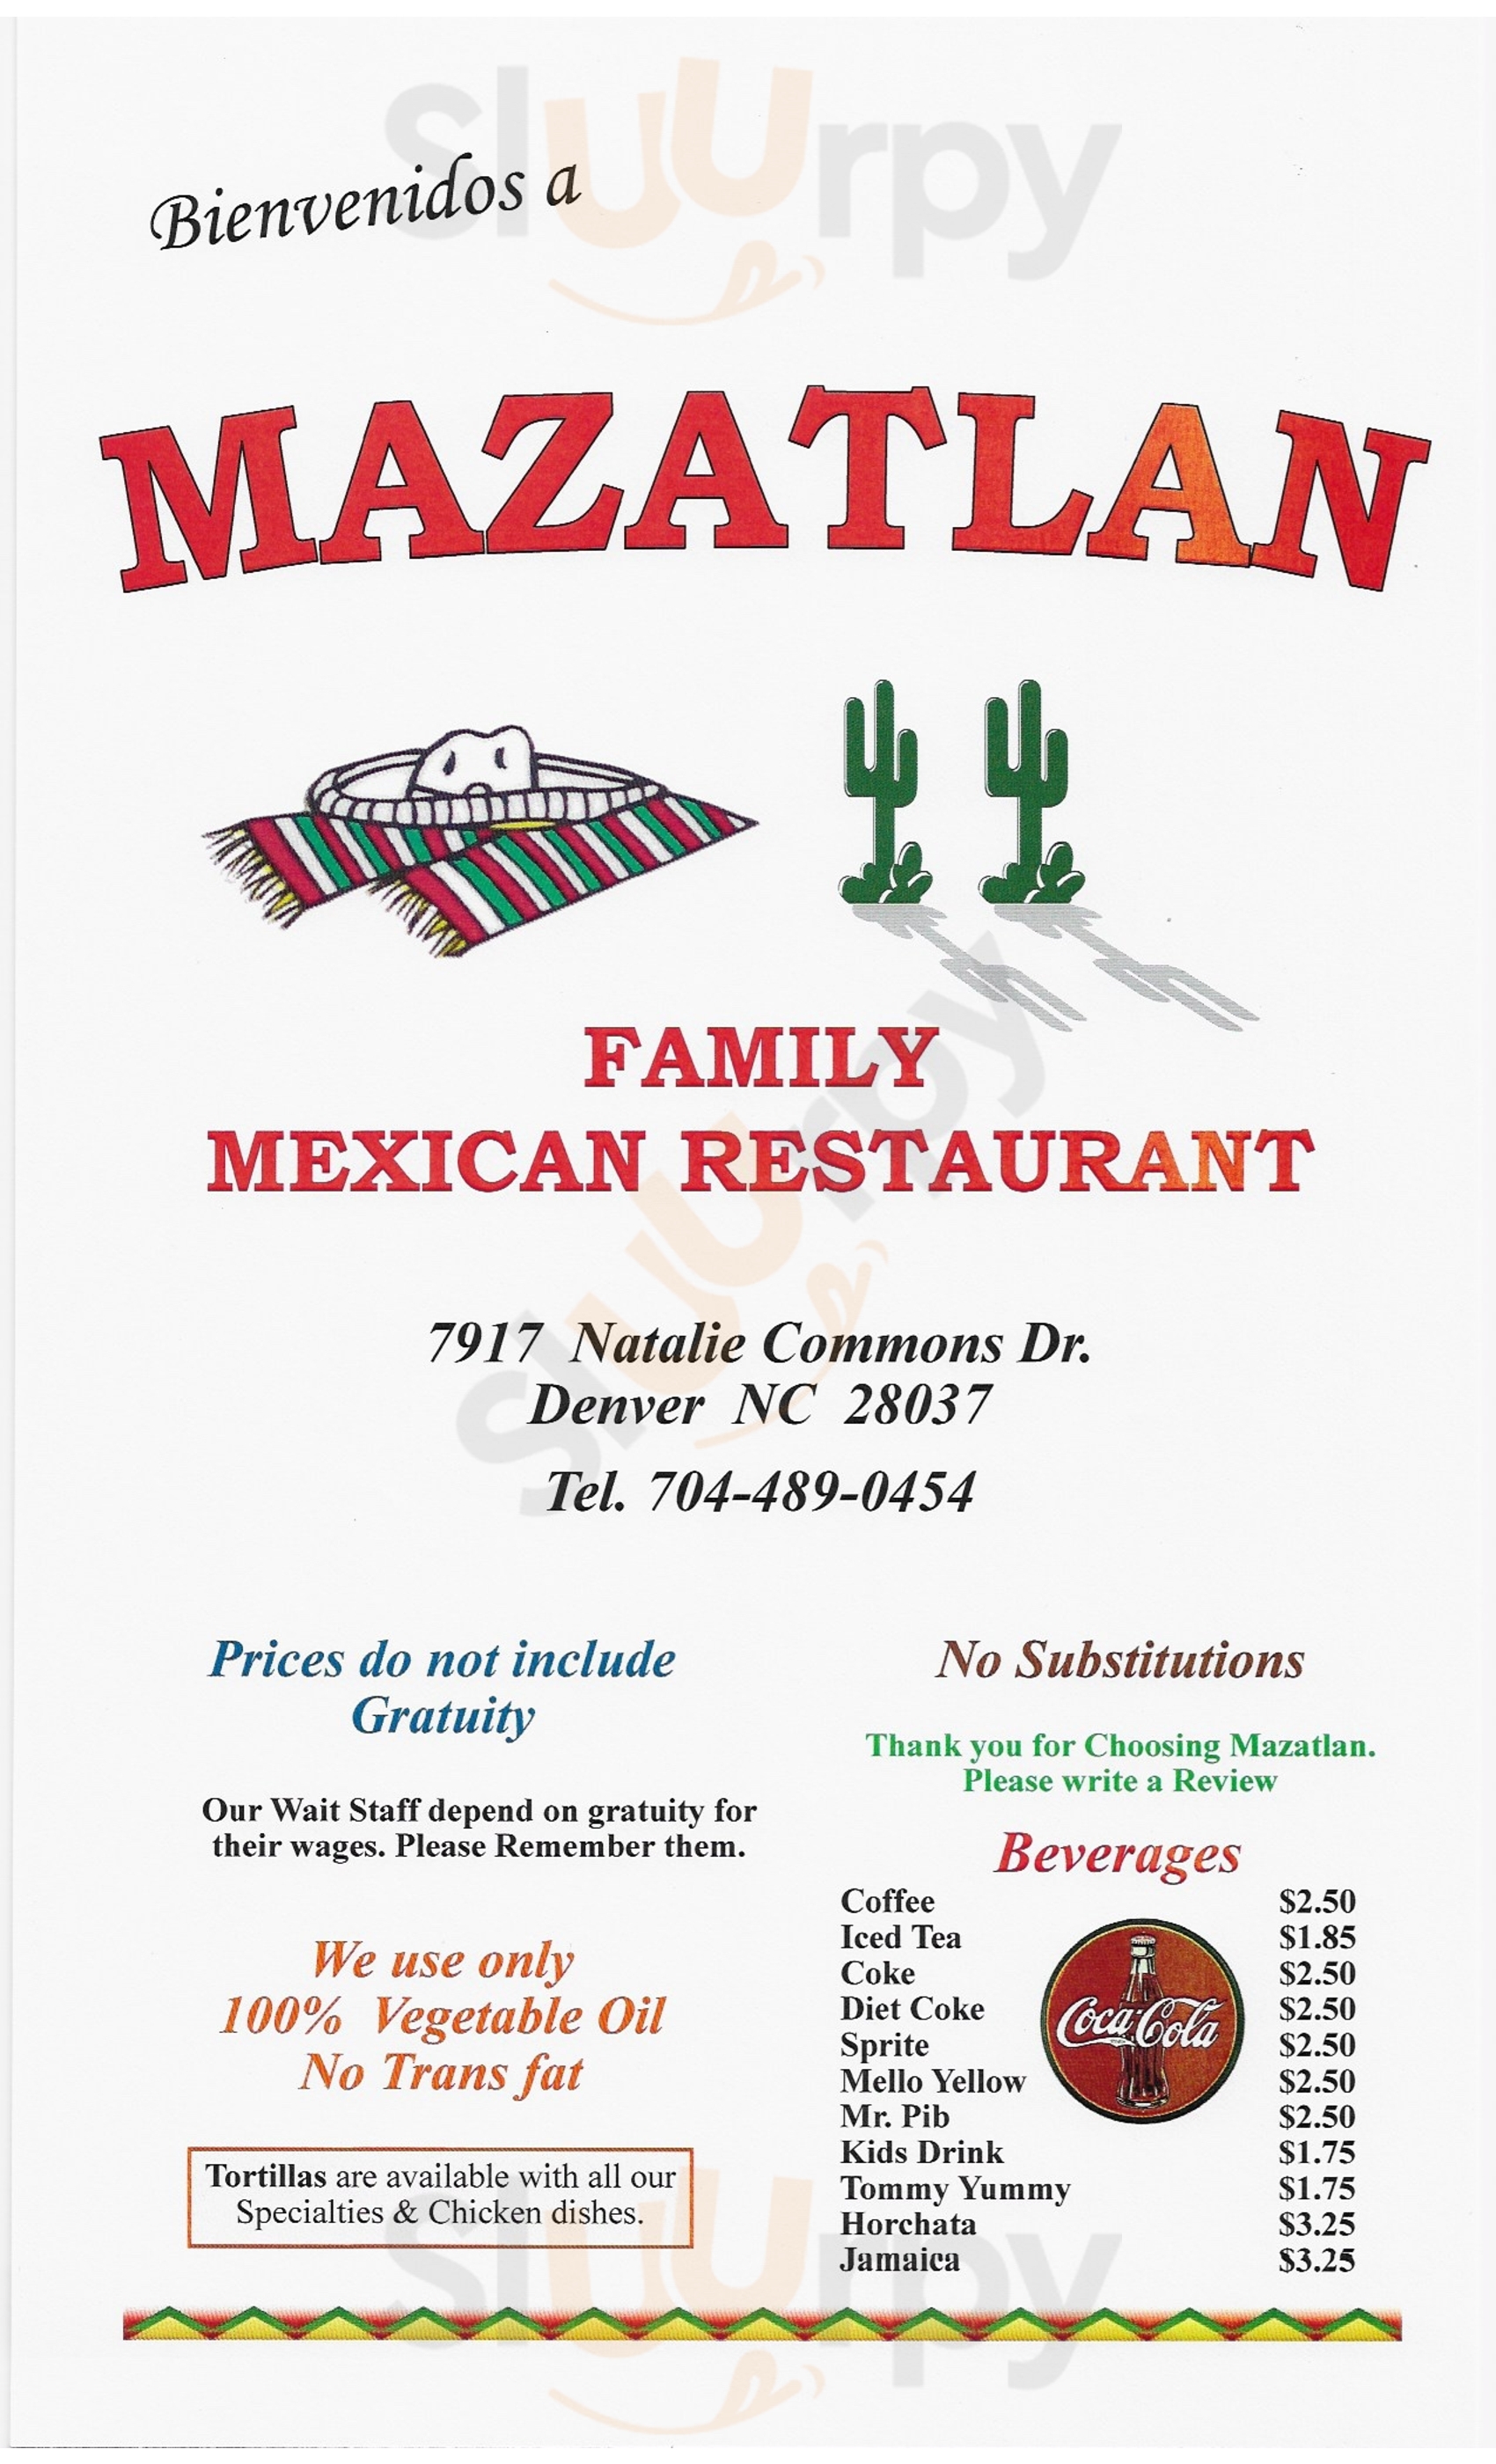 Mazatlan Family Mexican Restaurant - Denver Denver Menu - 1